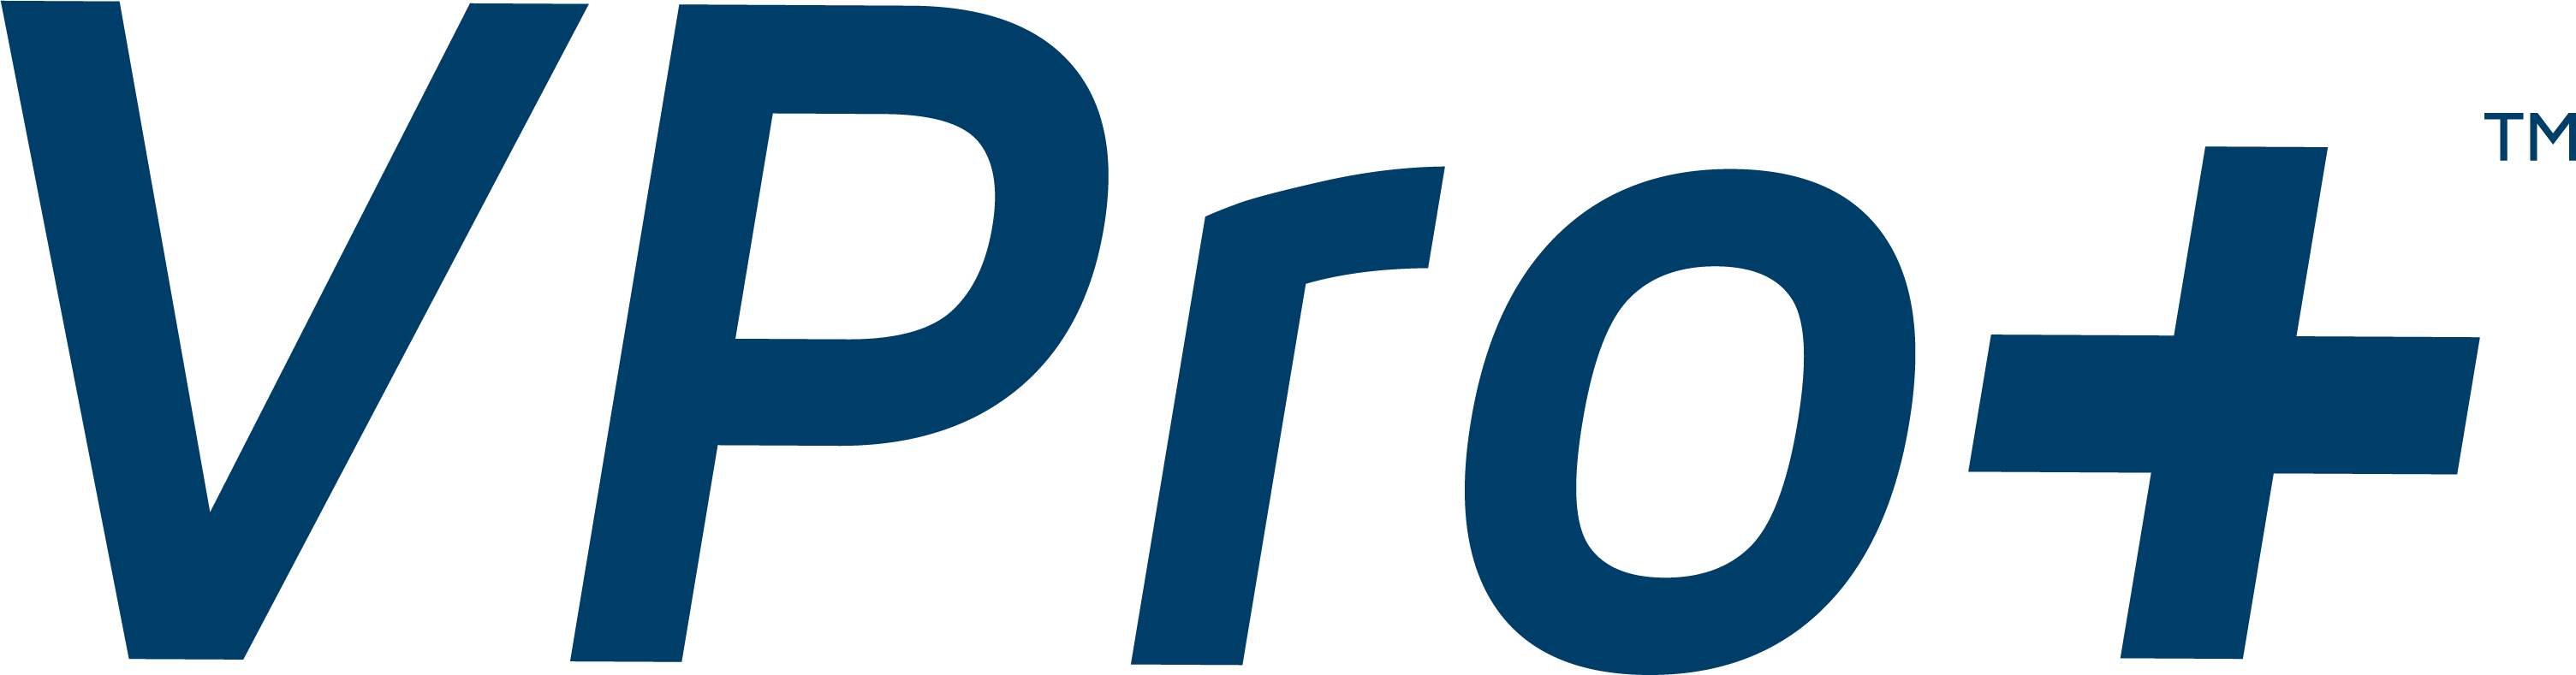 VPro_ Logo.png